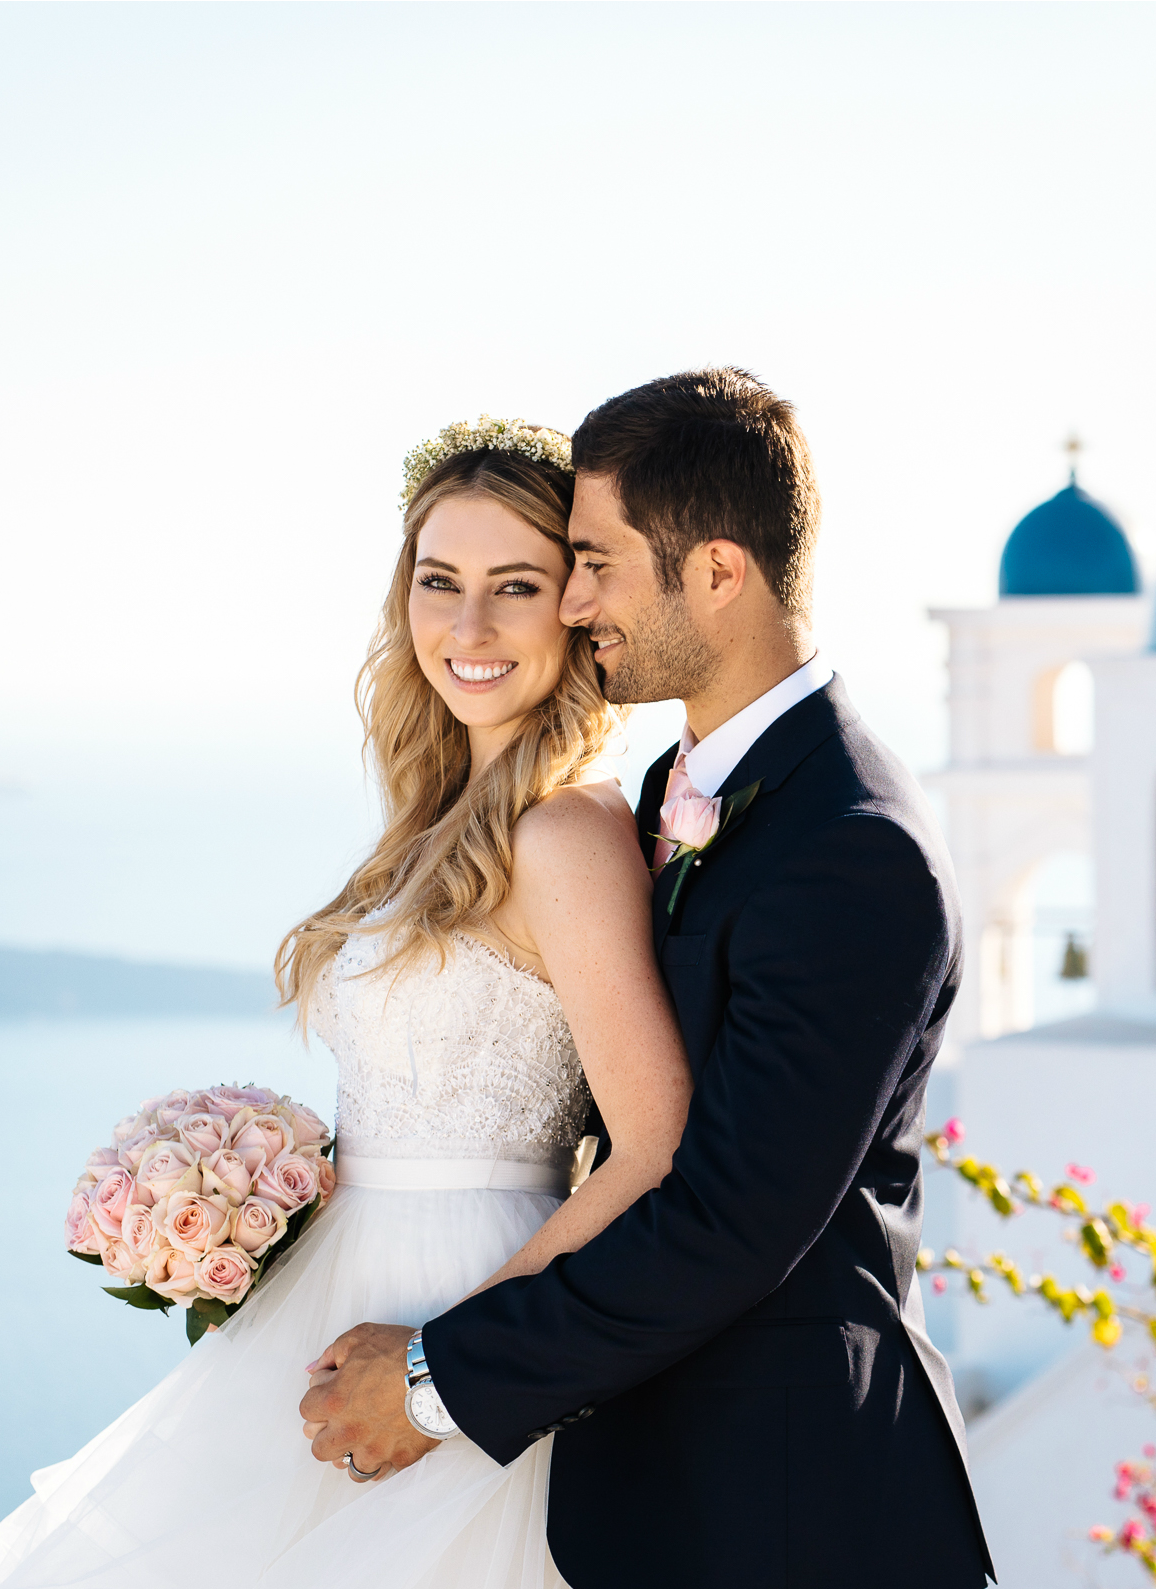 Vangelis Photography - Santorini Romance Wedding Package